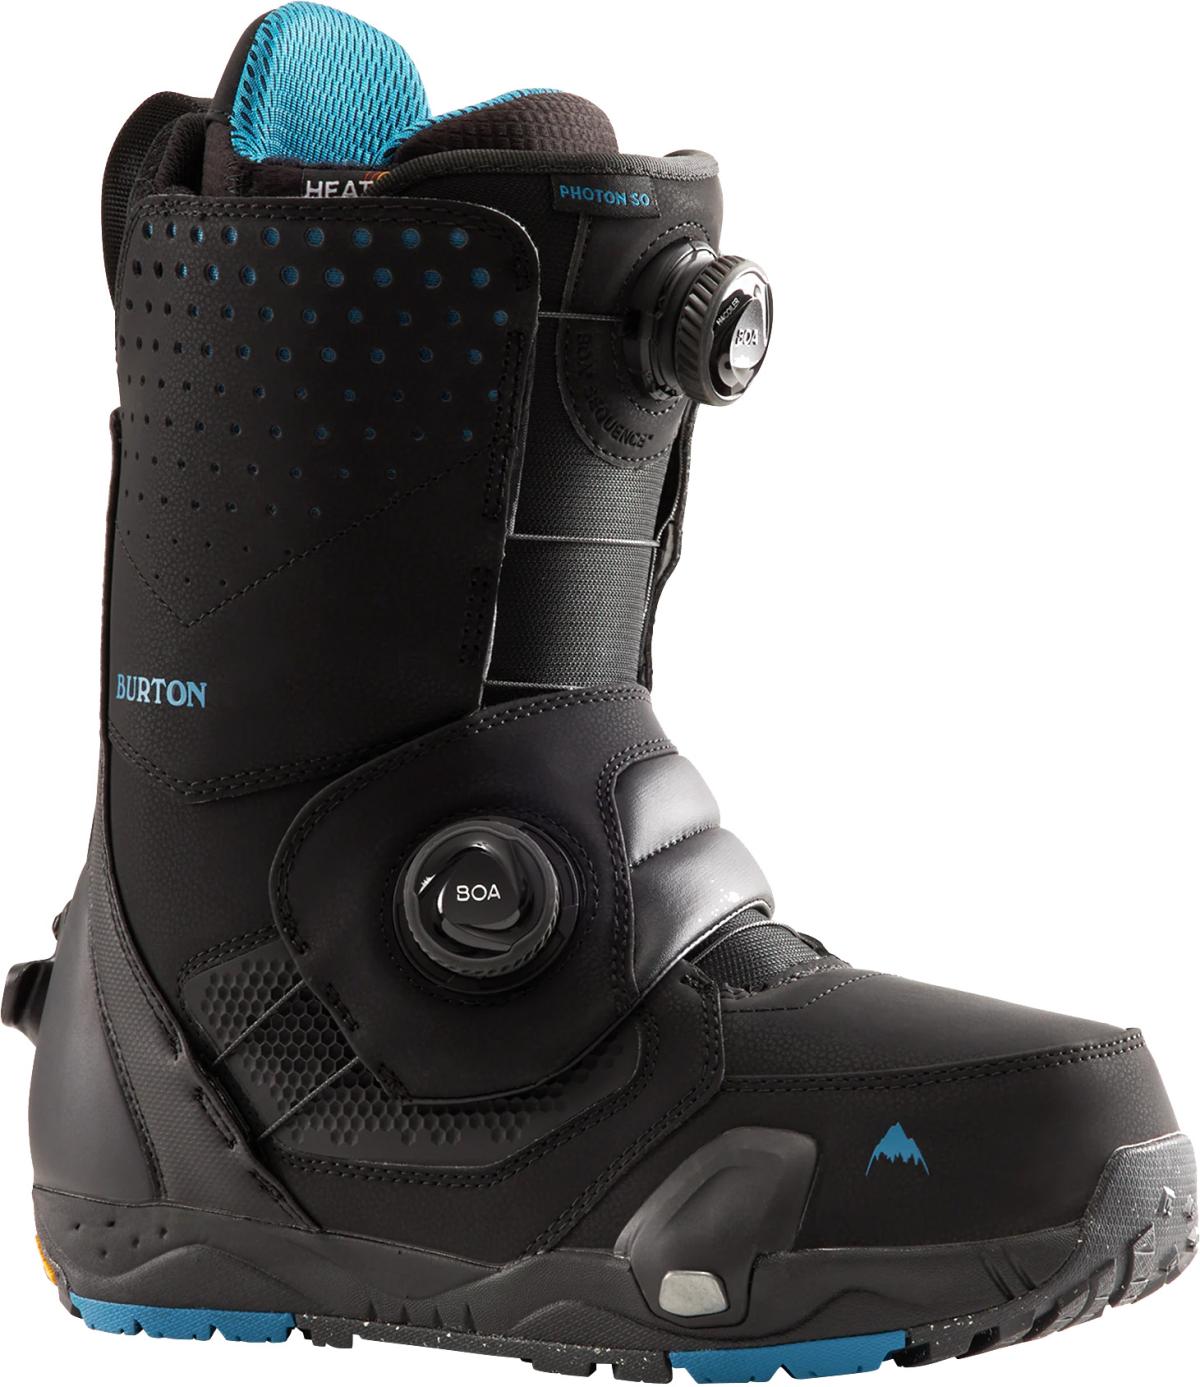 Burton Photon StepOn snowboard boots